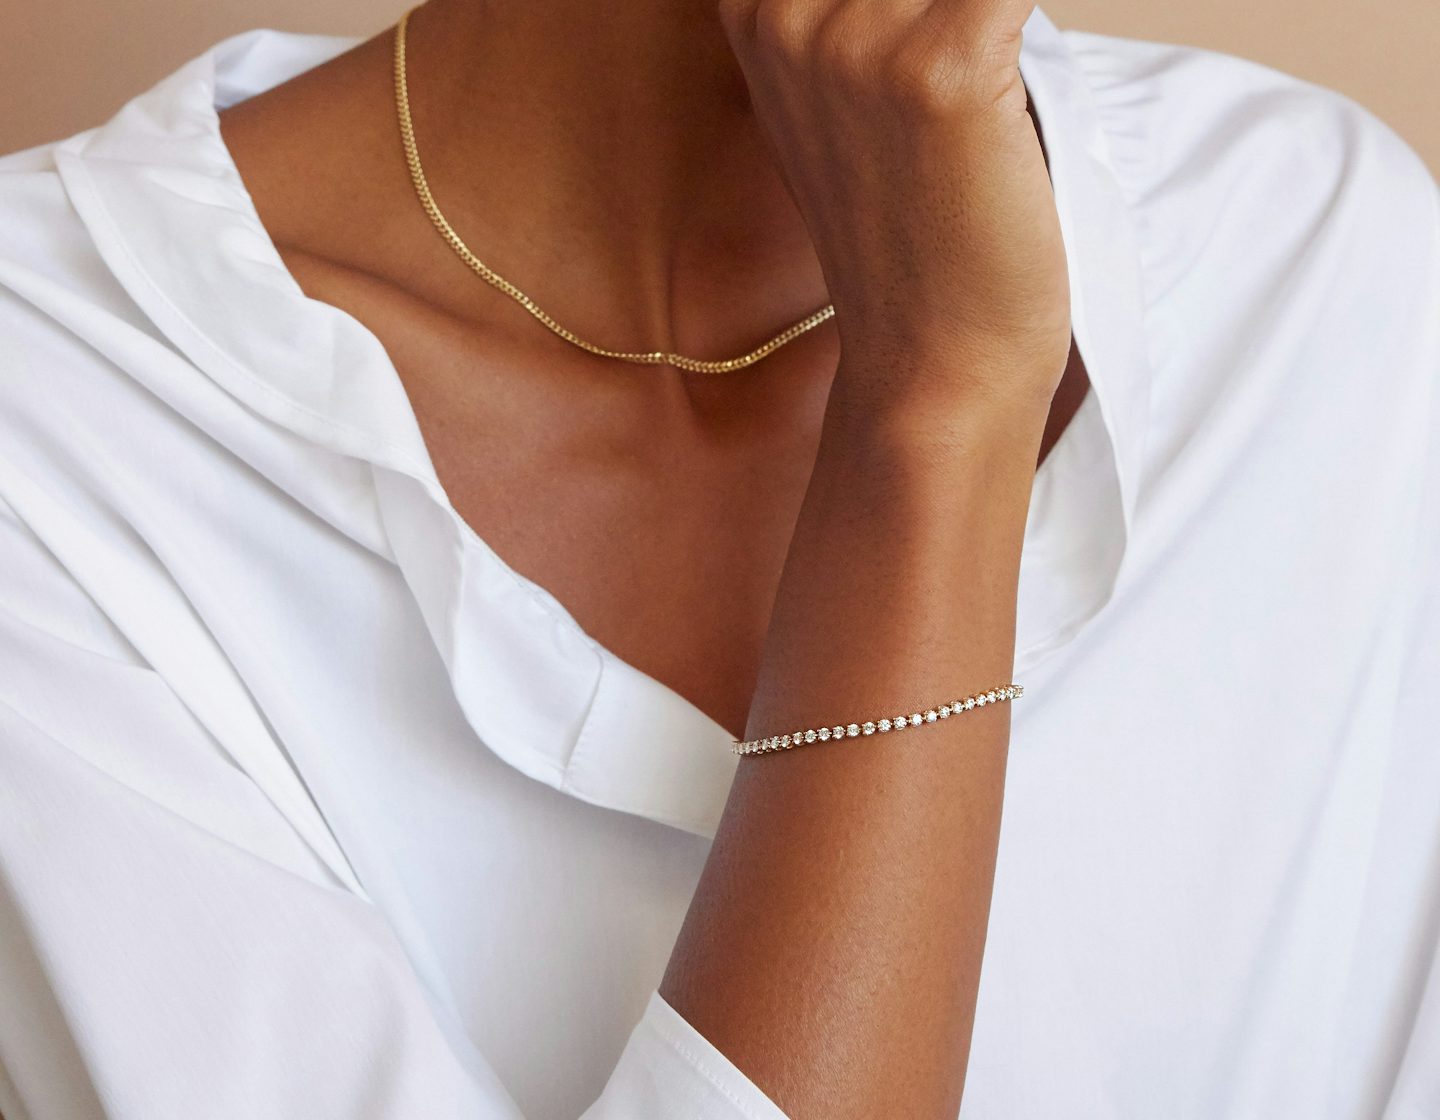 Tennis Bracelet | Round Brilliant | 14k | 18k White Gold | Diamond size: Medium | Chain length: 5.5